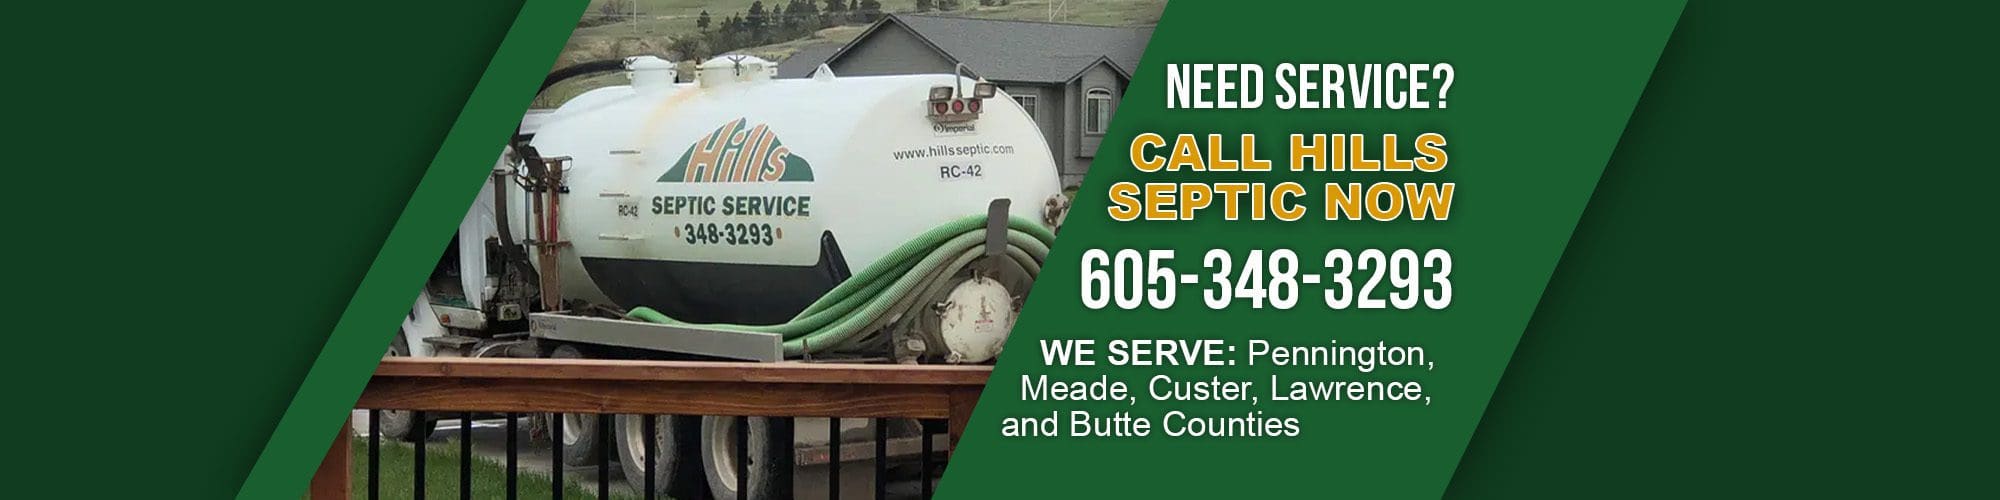 Need service? Call Hills Septic Header